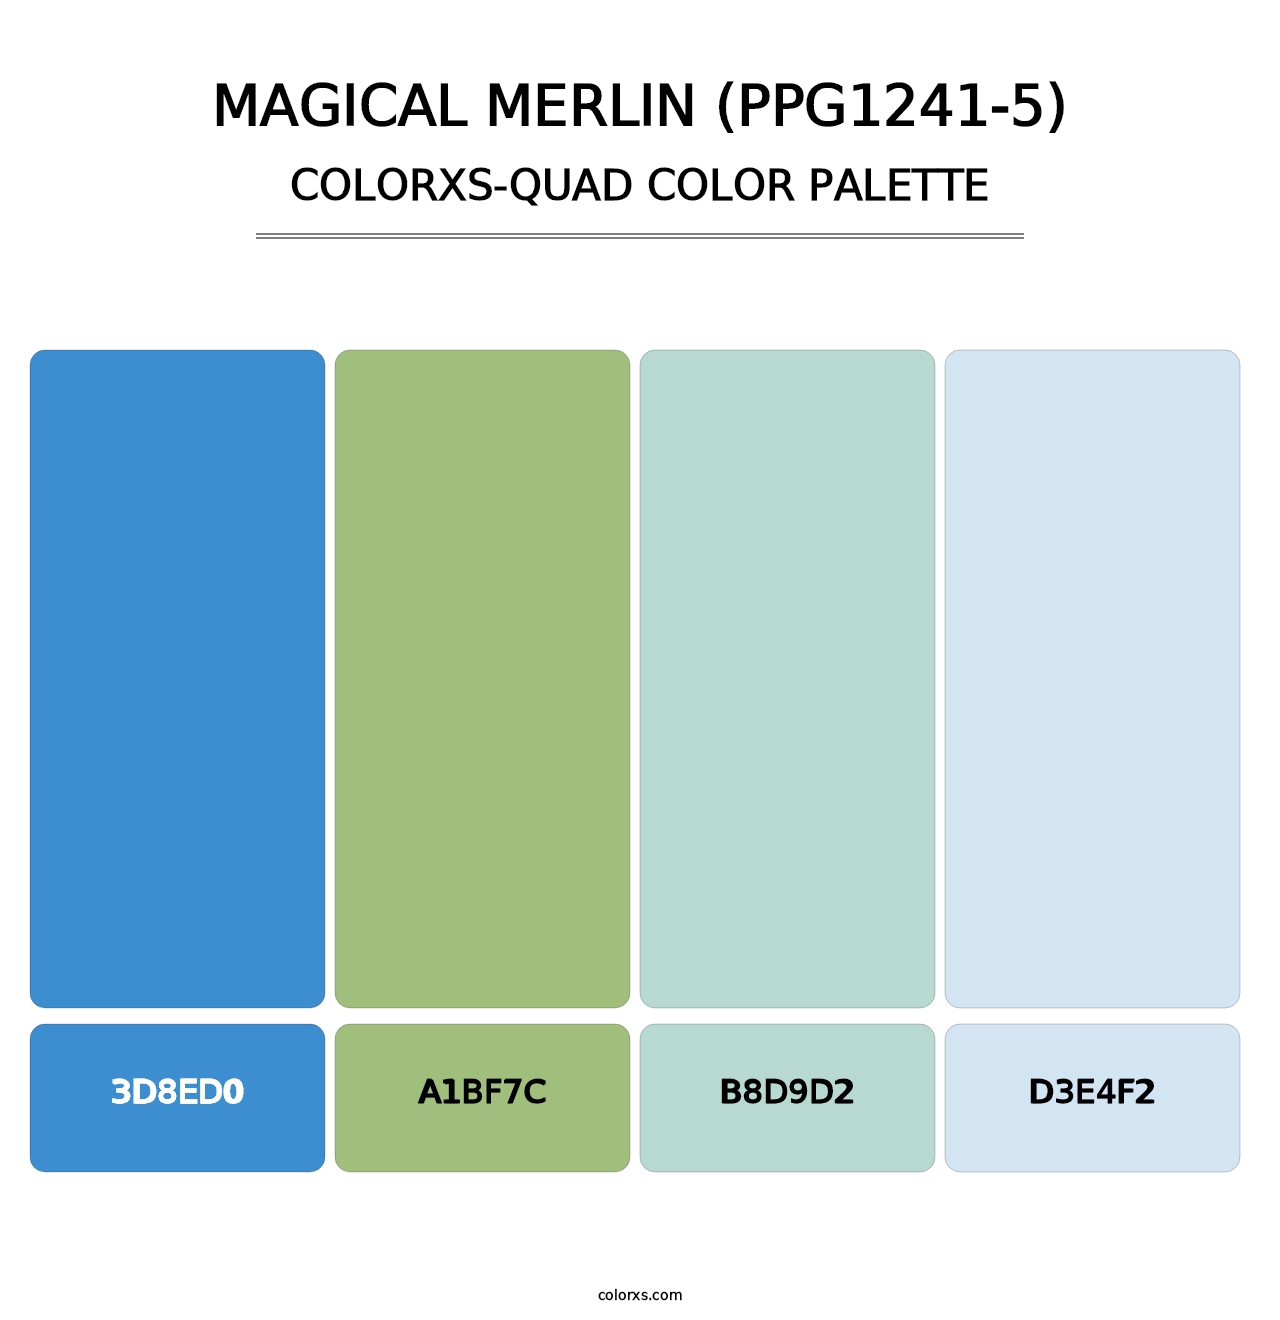 Magical Merlin (PPG1241-5) - Colorxs Quad Palette